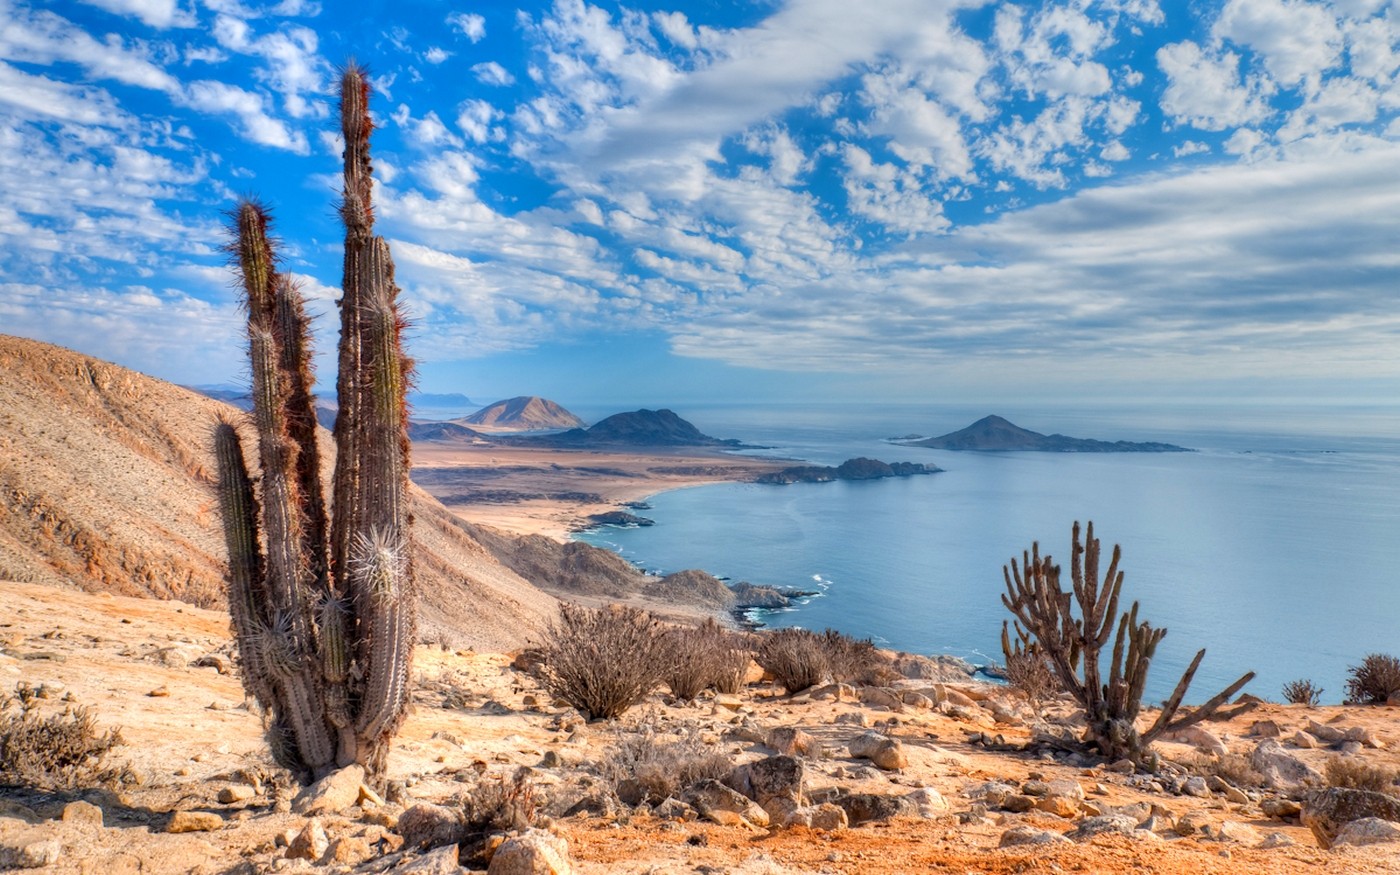 General 1400x875 nature landscape beach cactus sea hills clouds Atacama Desert coast Chile national park desert South America